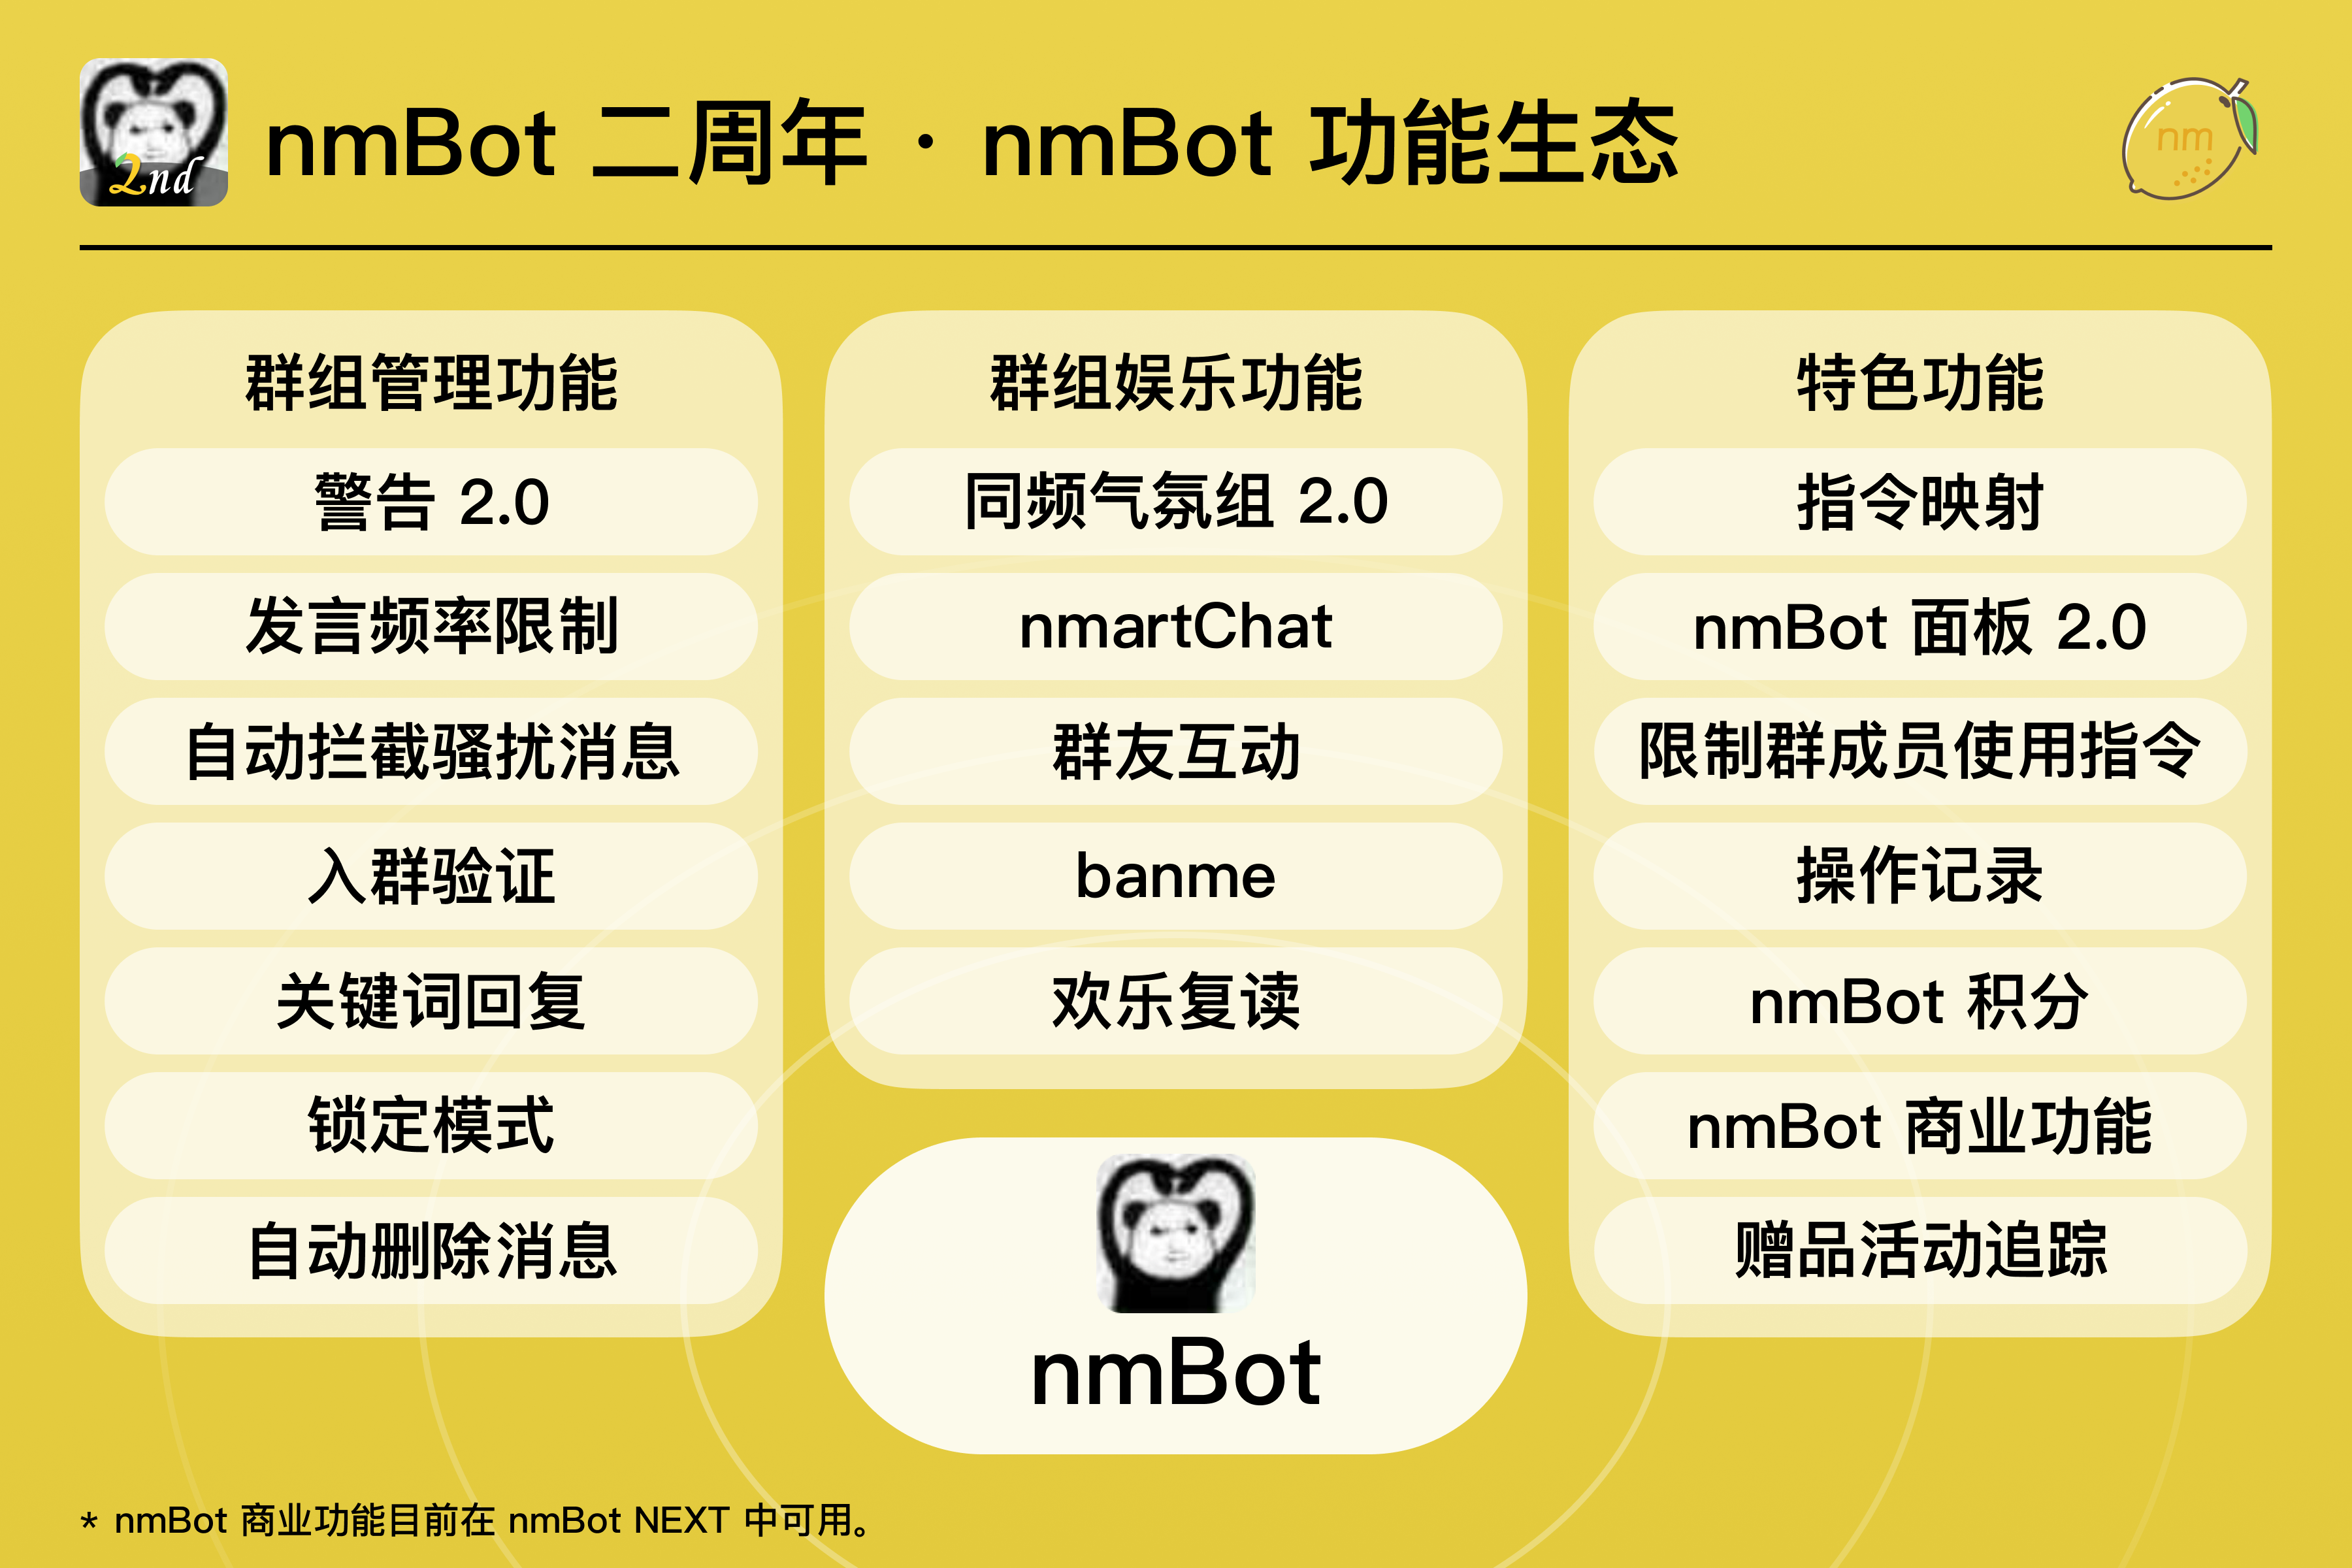 nmBot 丰富的功能生态进一步发展完善。